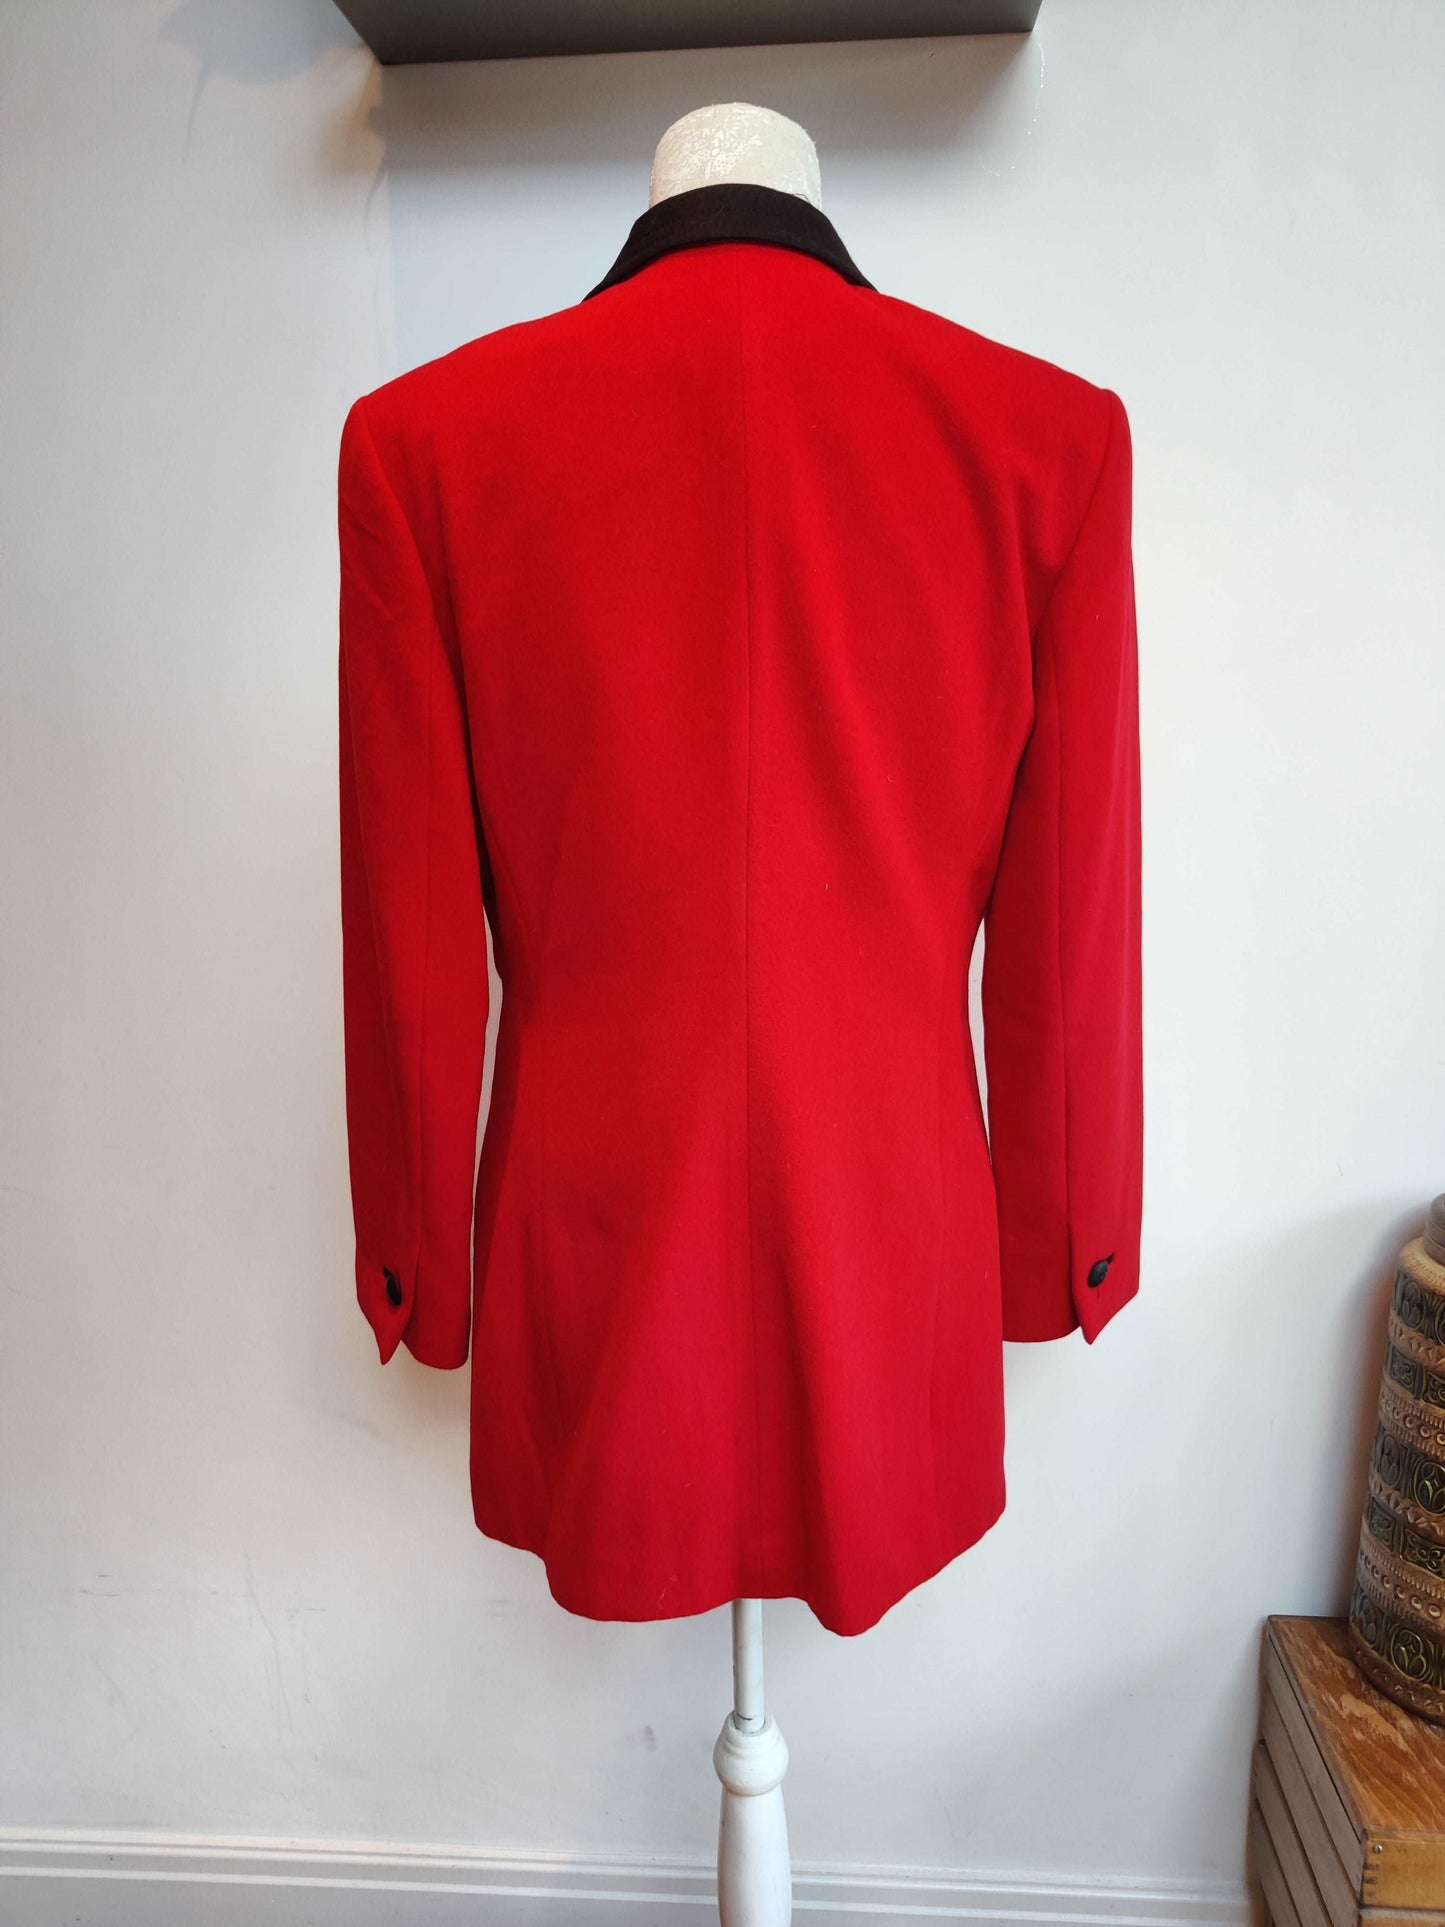 Gorgeous red wool Louis Feraud jacket